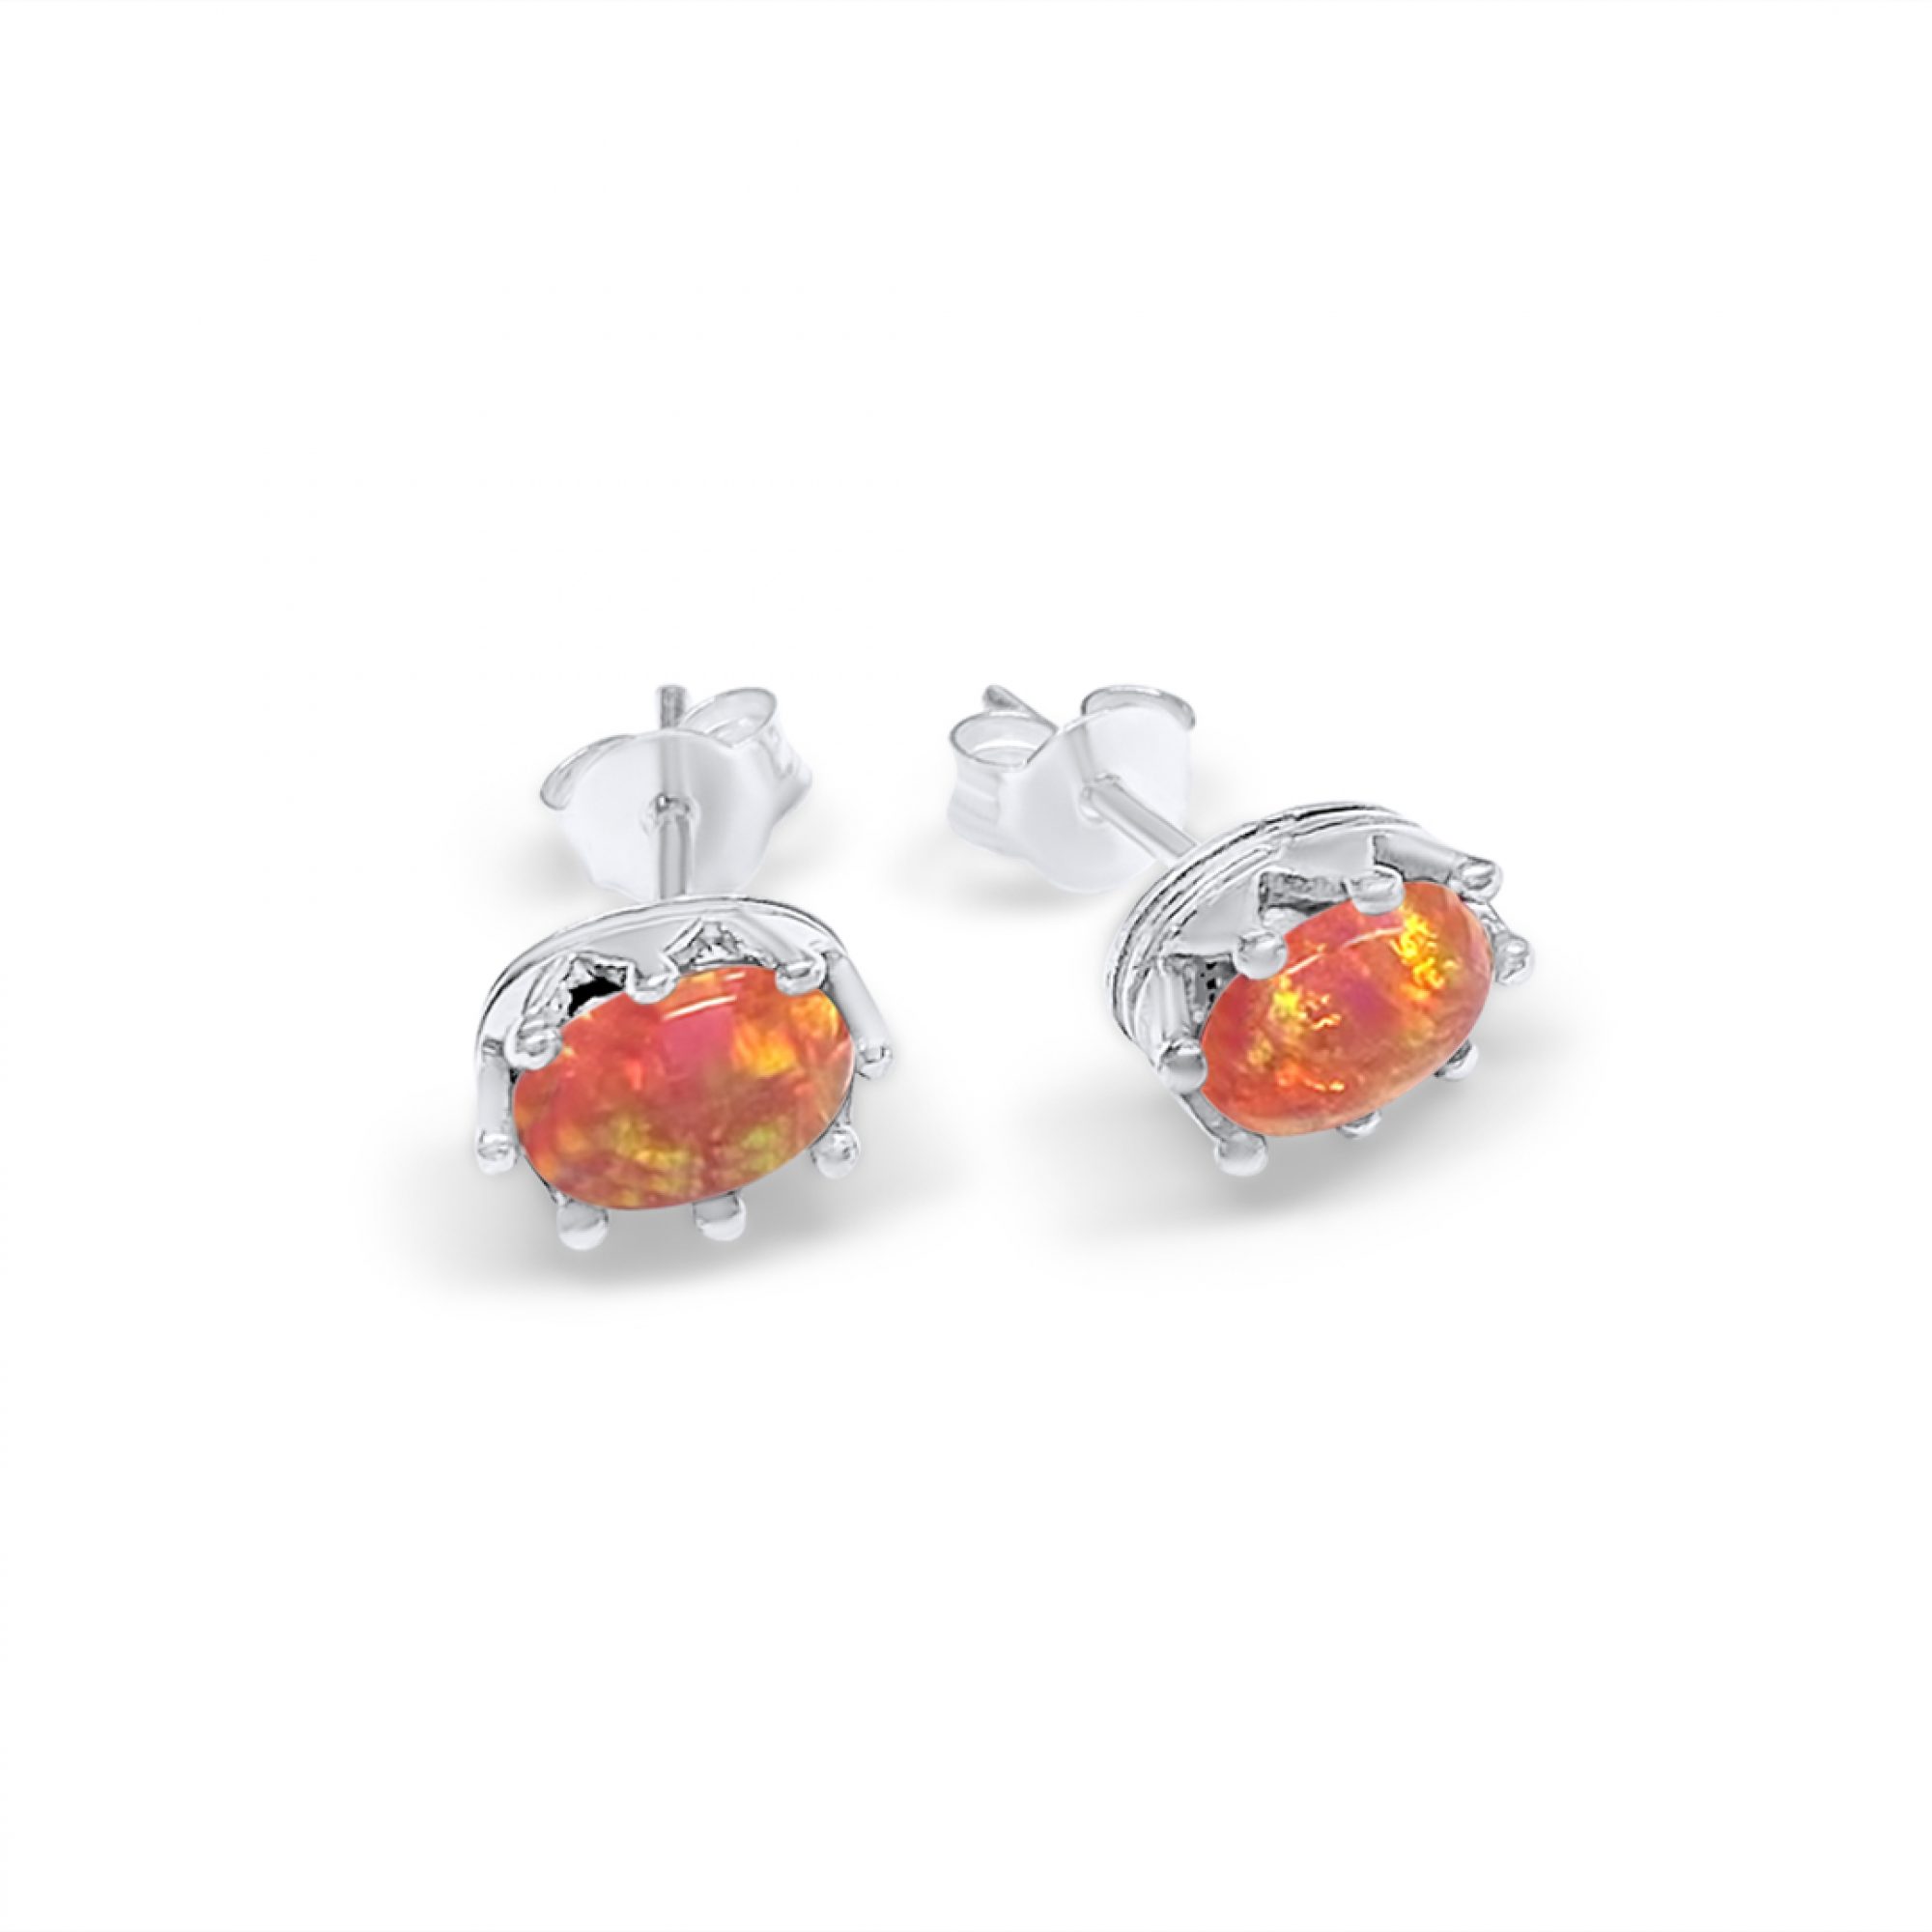 Silver stud earrings with opal stone